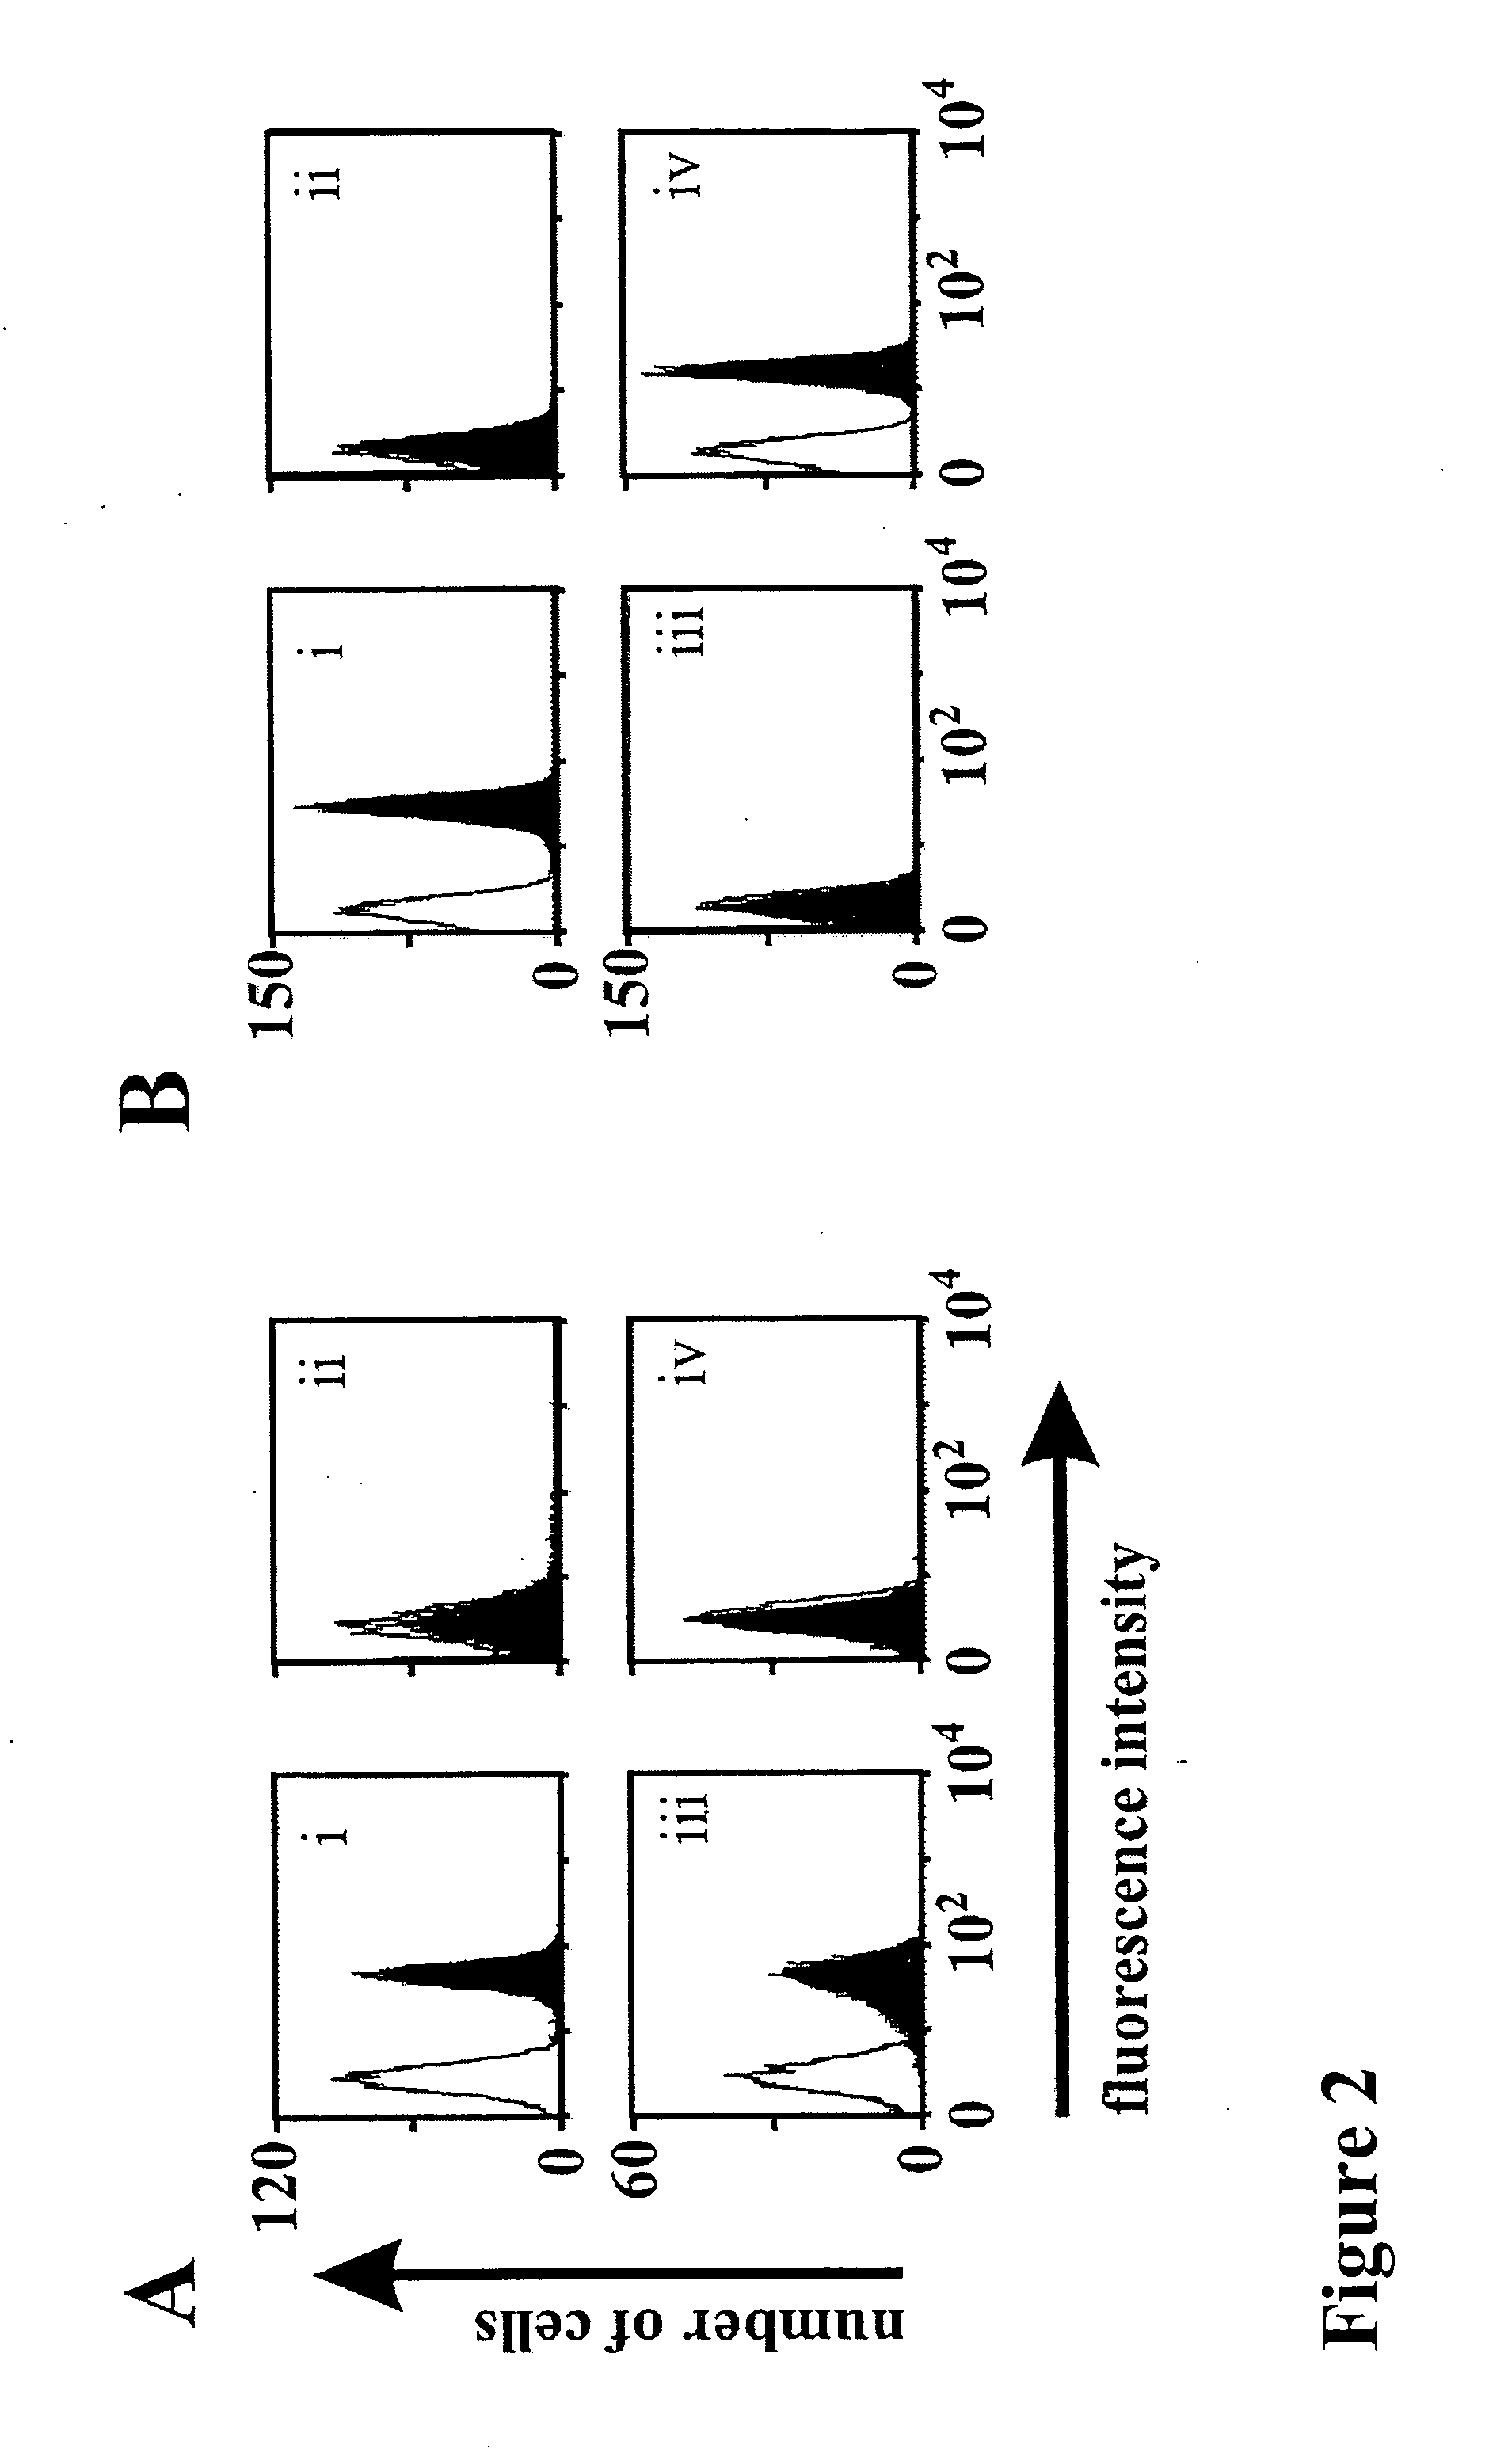 Bispecific antibody devoid of Fc region and method of treatment using same